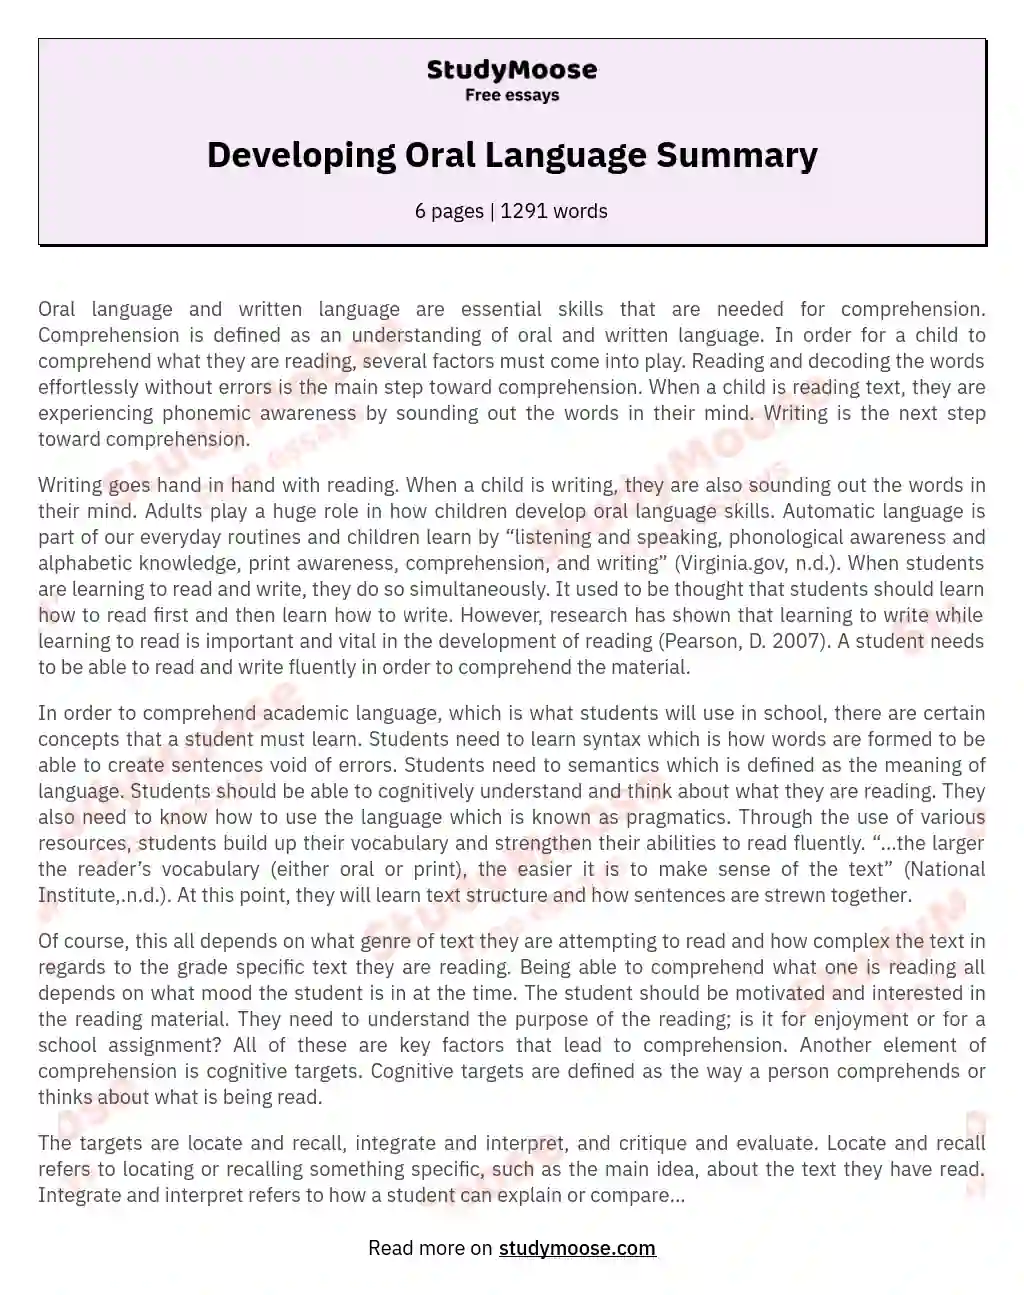 Developing Oral Language Summary essay